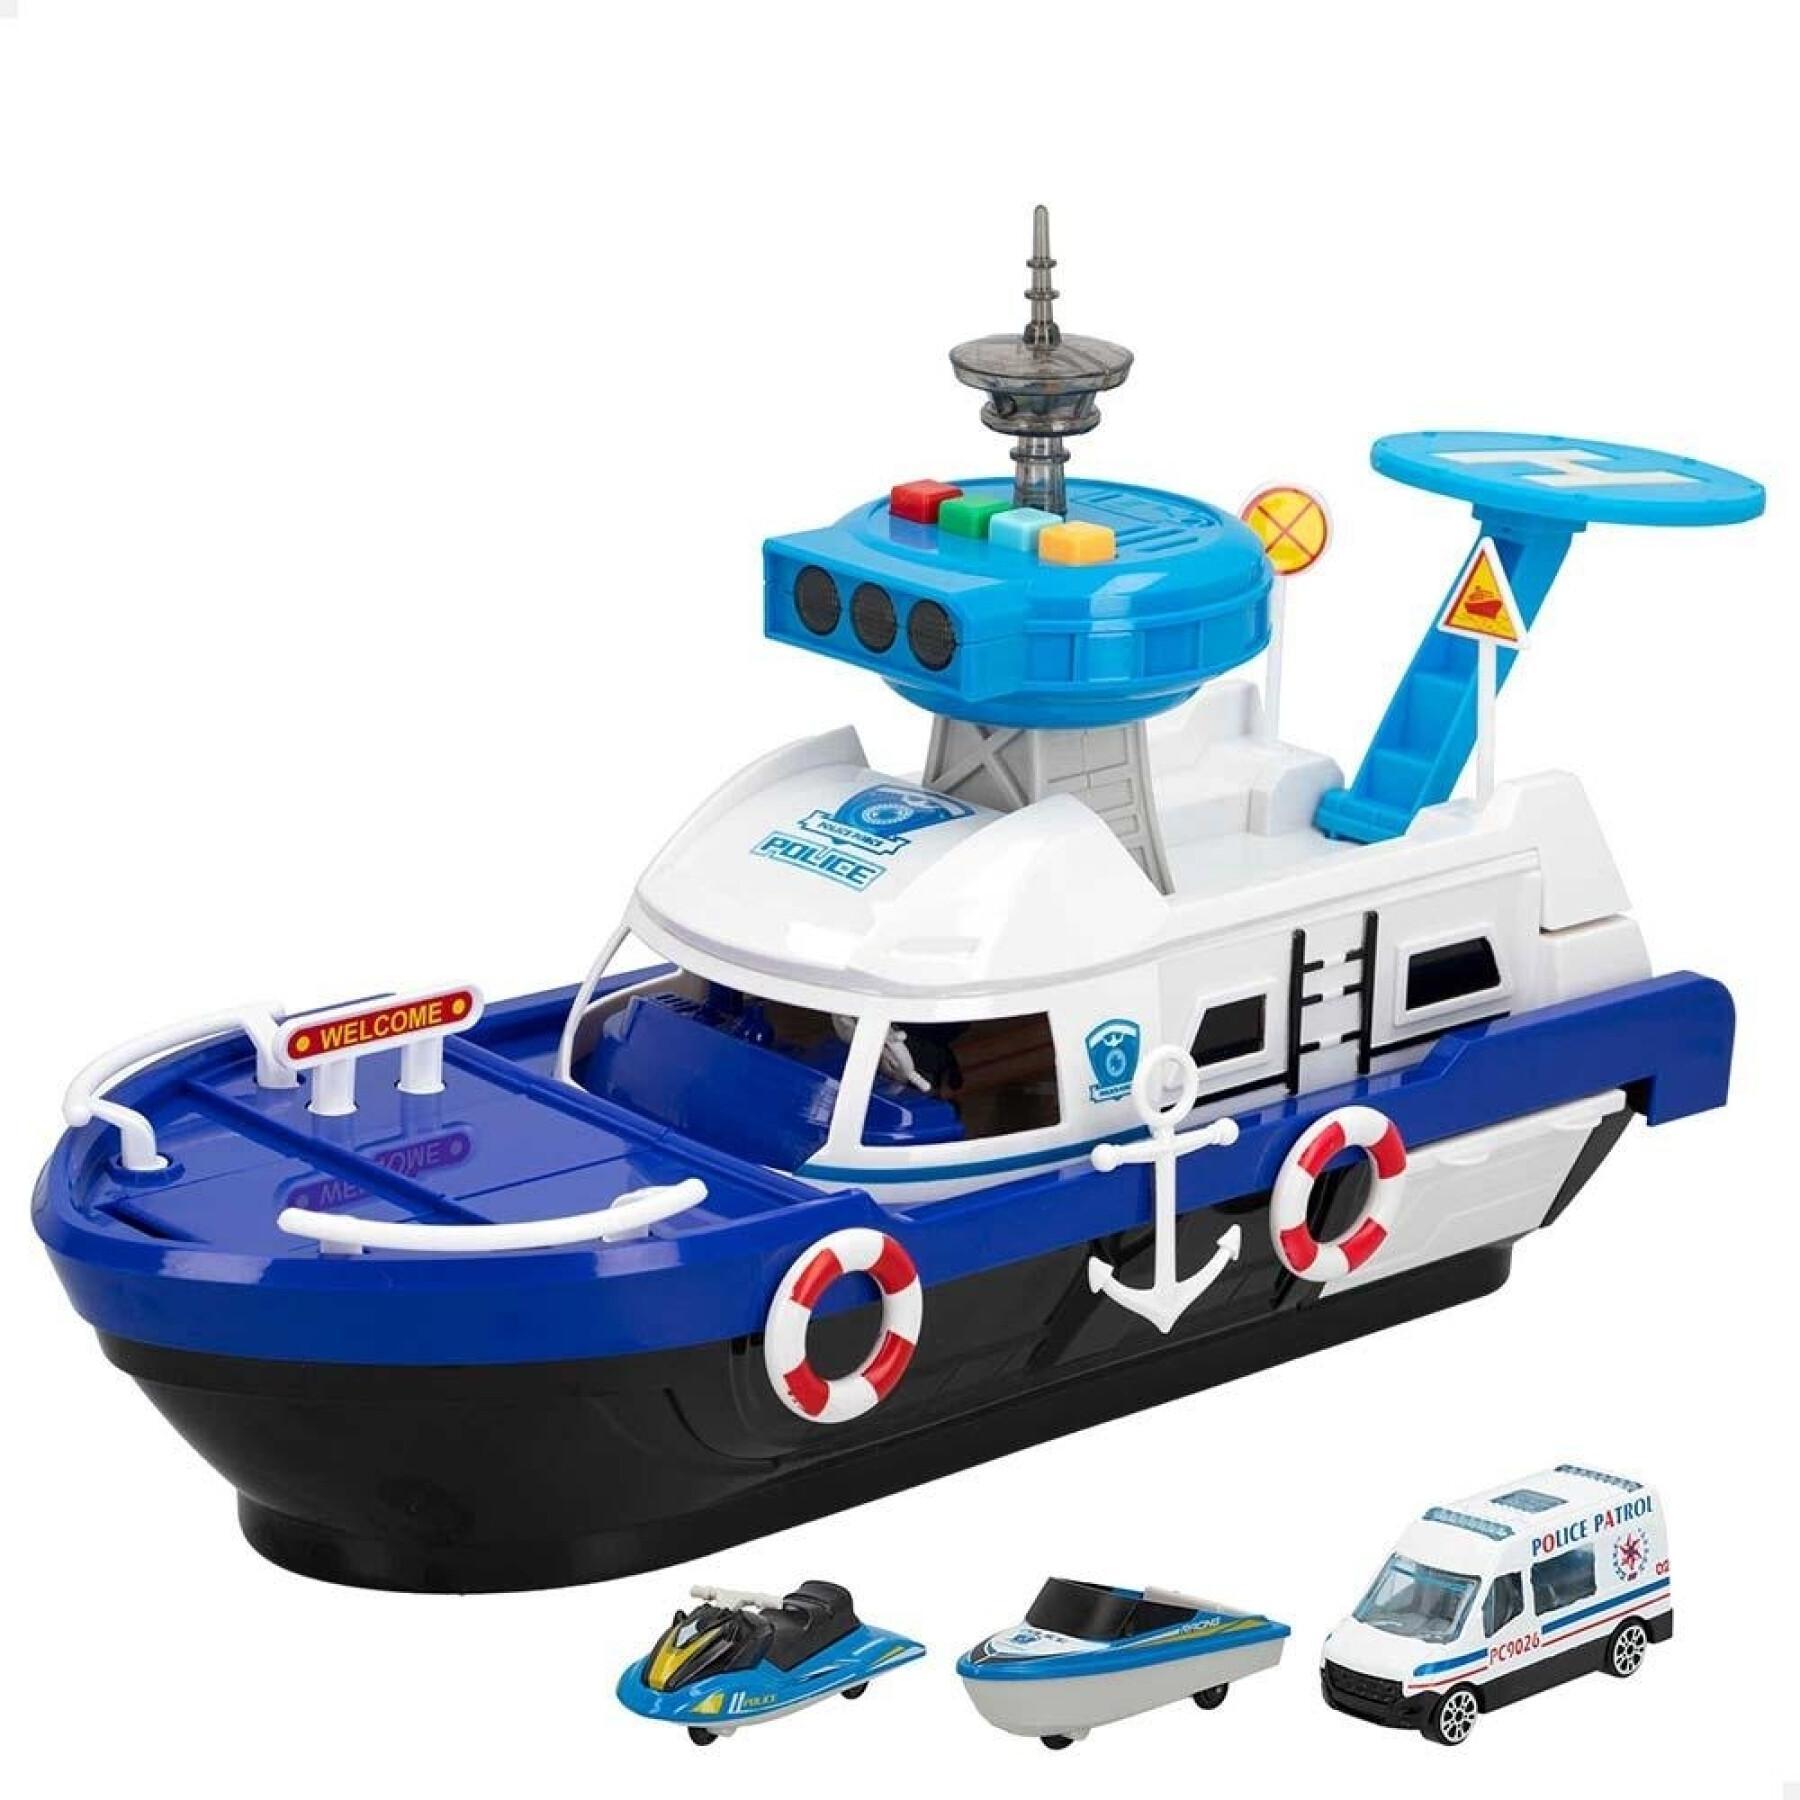 Politieboot CB Toys